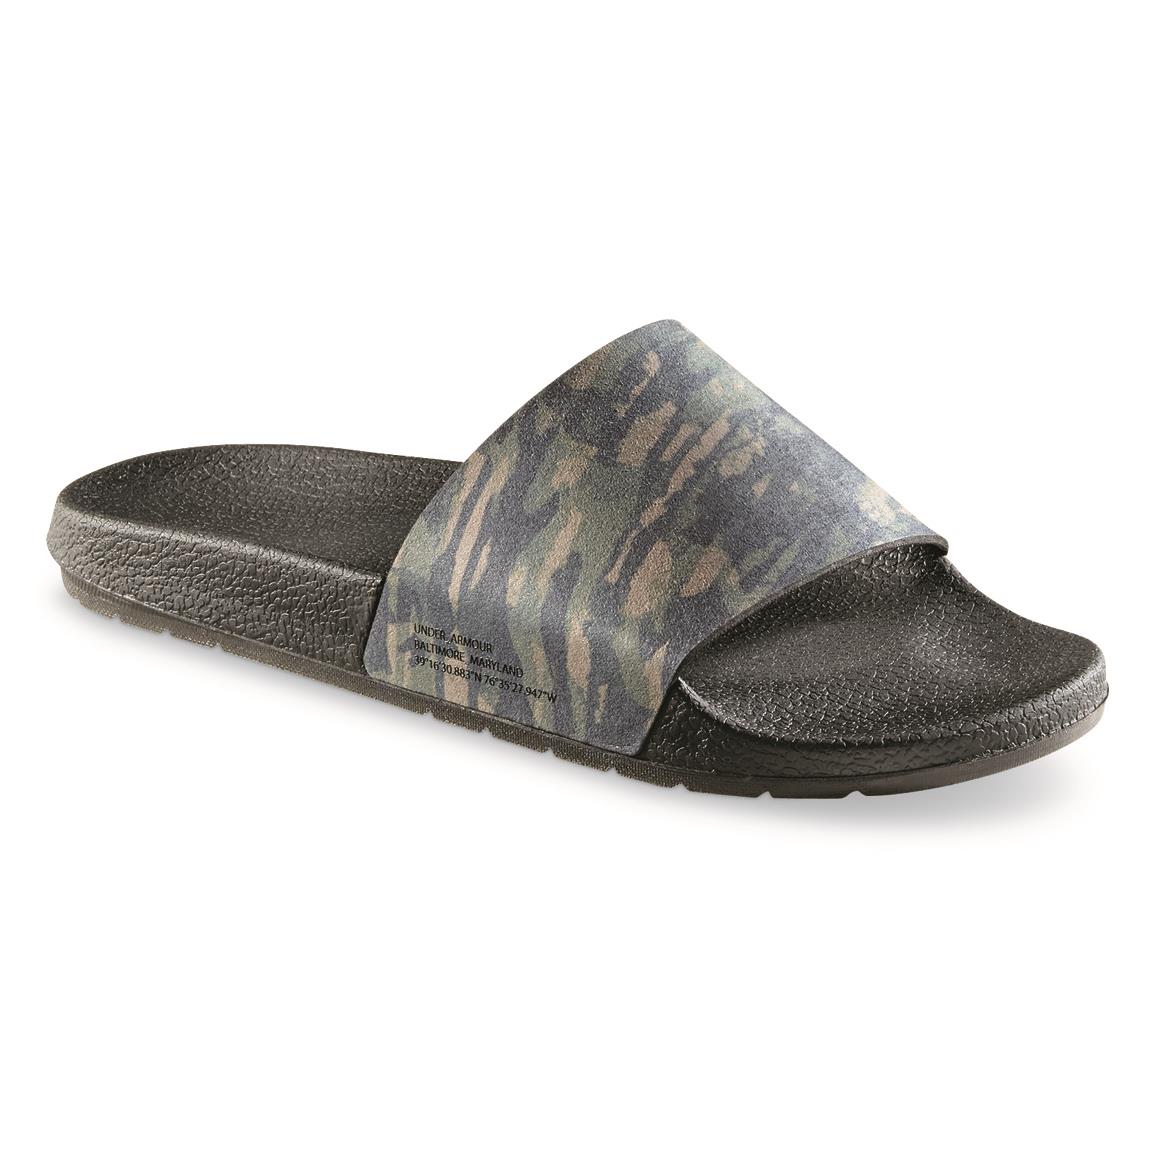 under armour men's camouflage slide sandals